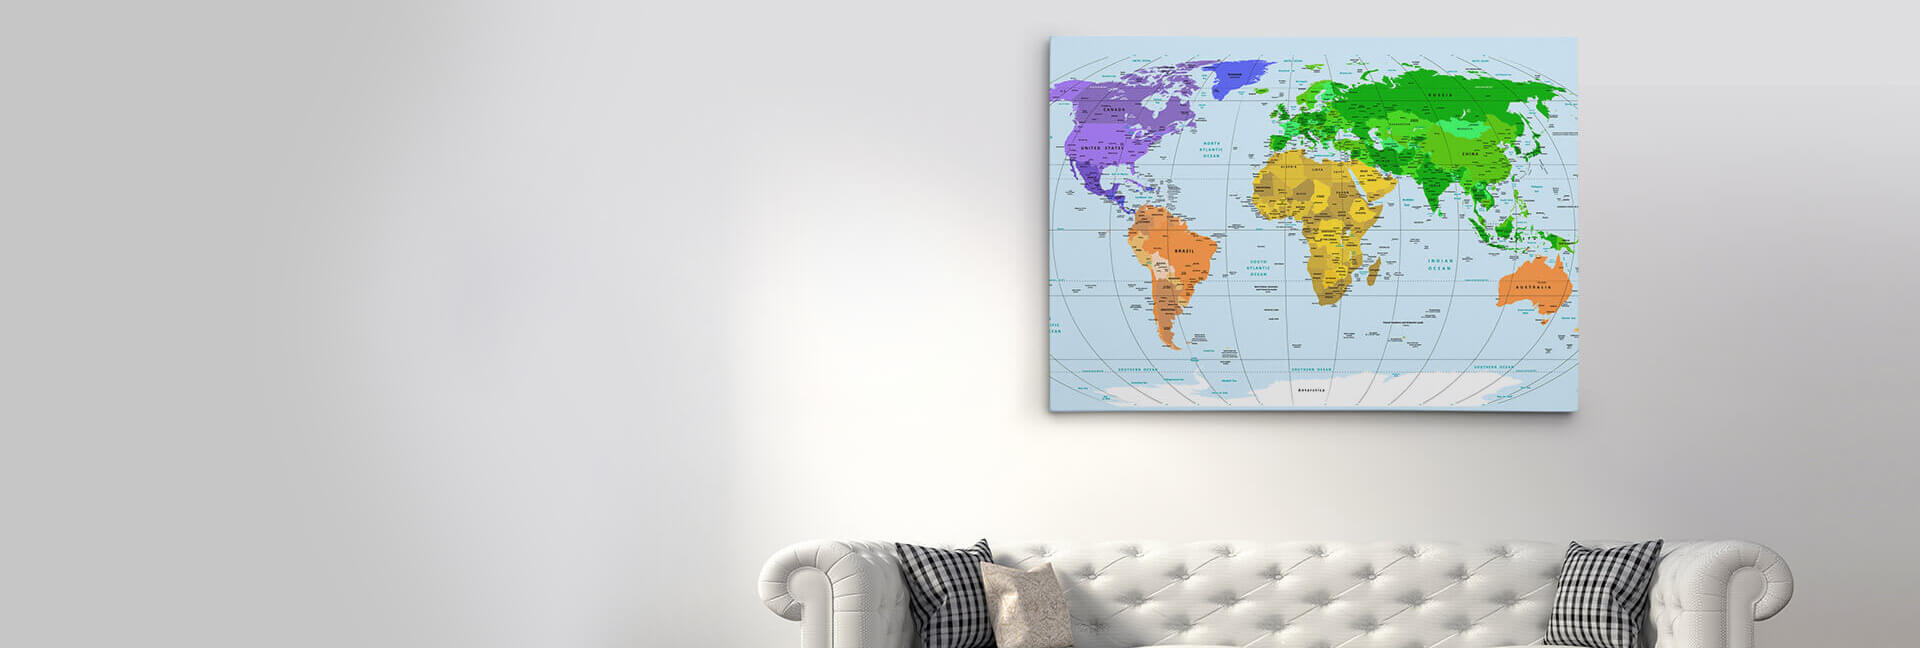 World Maps on Canvas